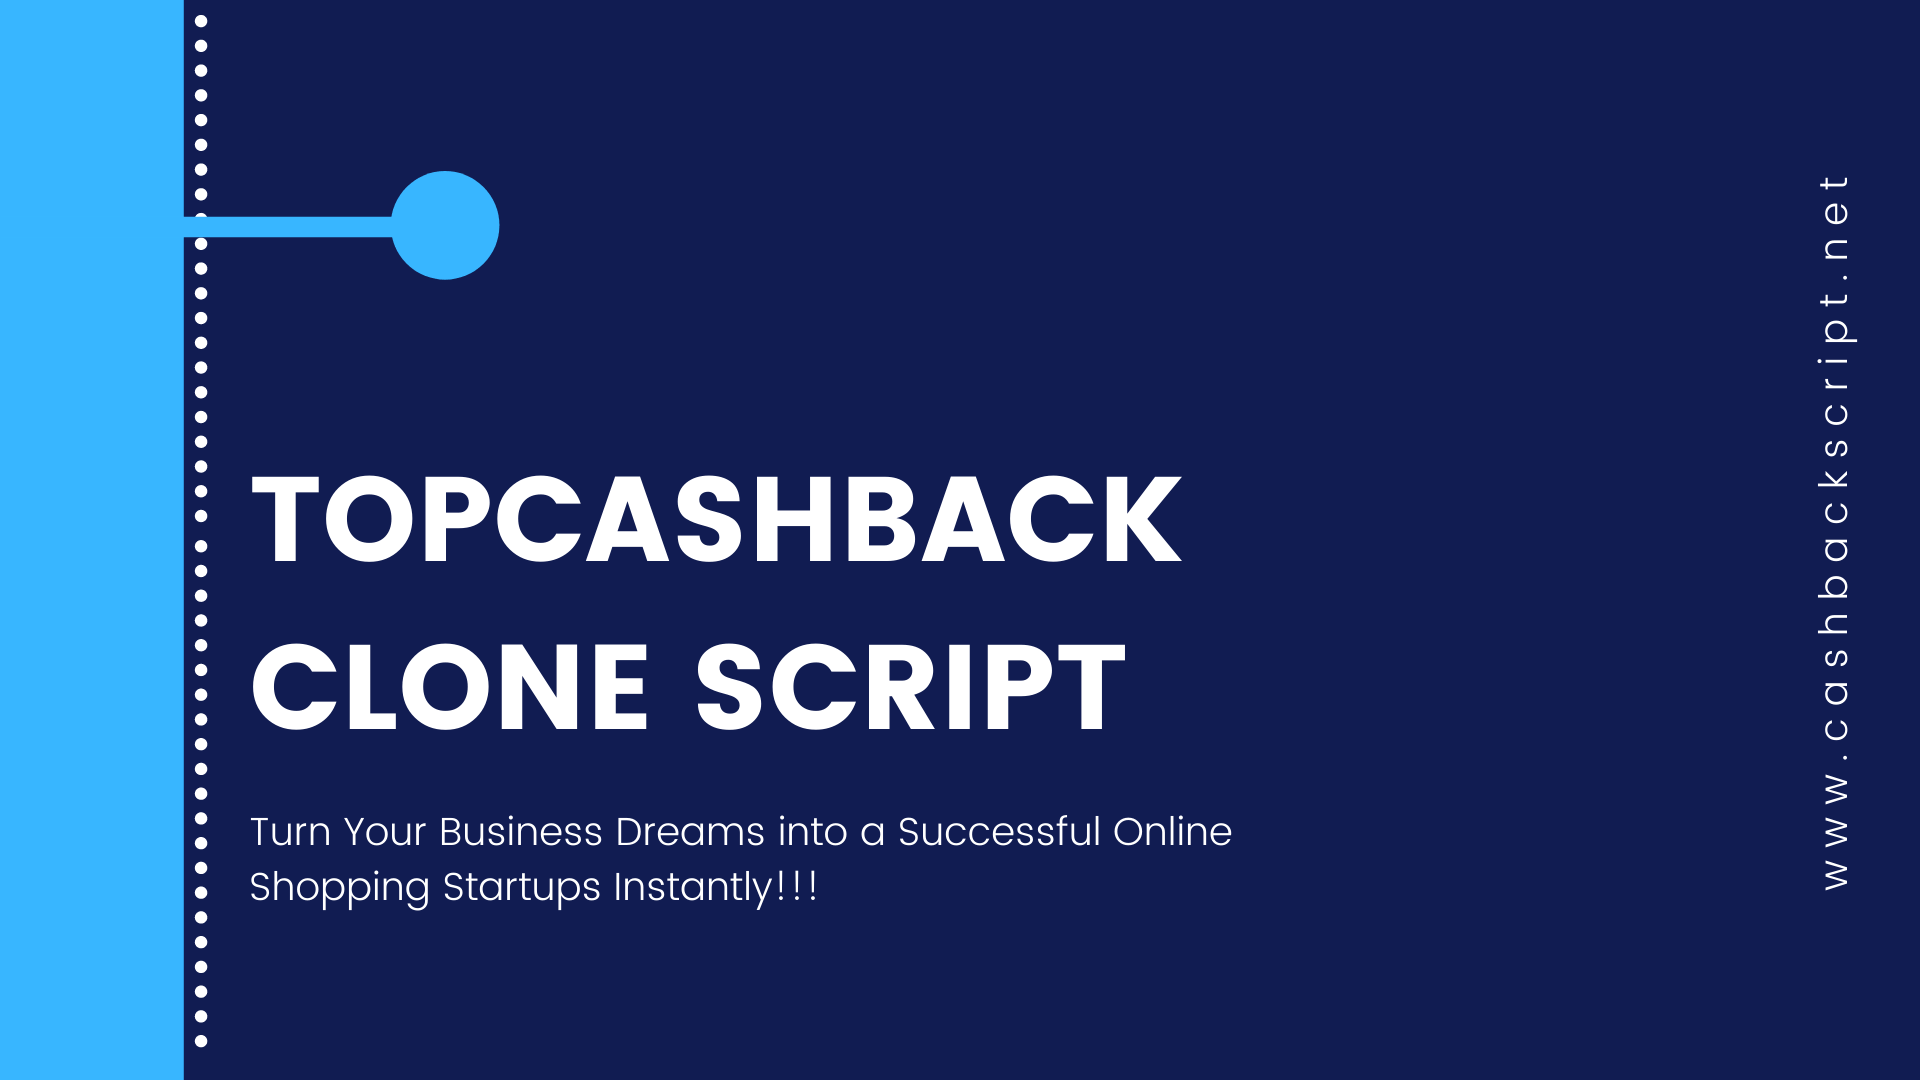 TopCashback Clone Script to Launch your own Cashback Platform like TopCashback